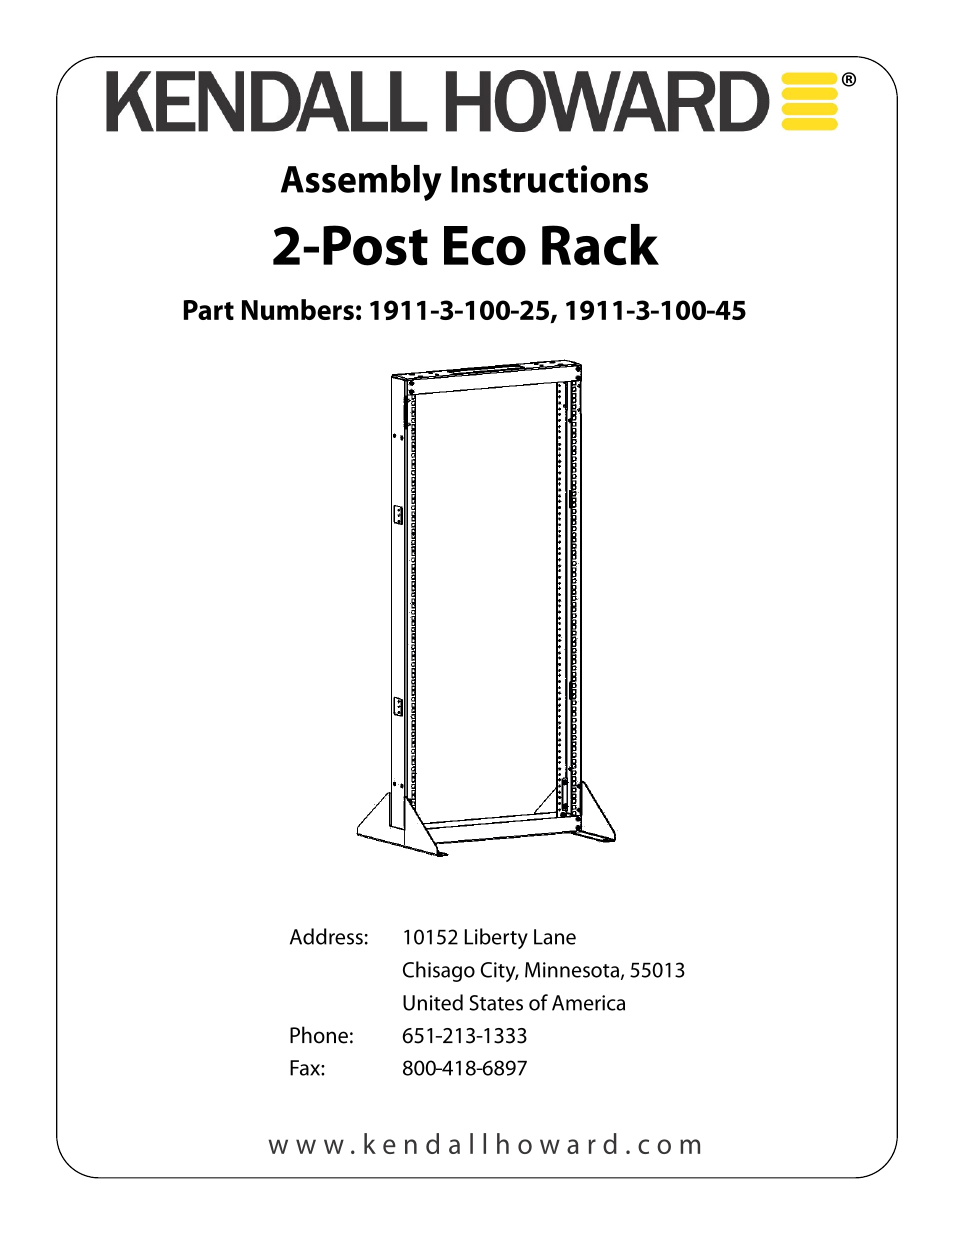 1911-3-100-25 25U 2-Post ECO Rack